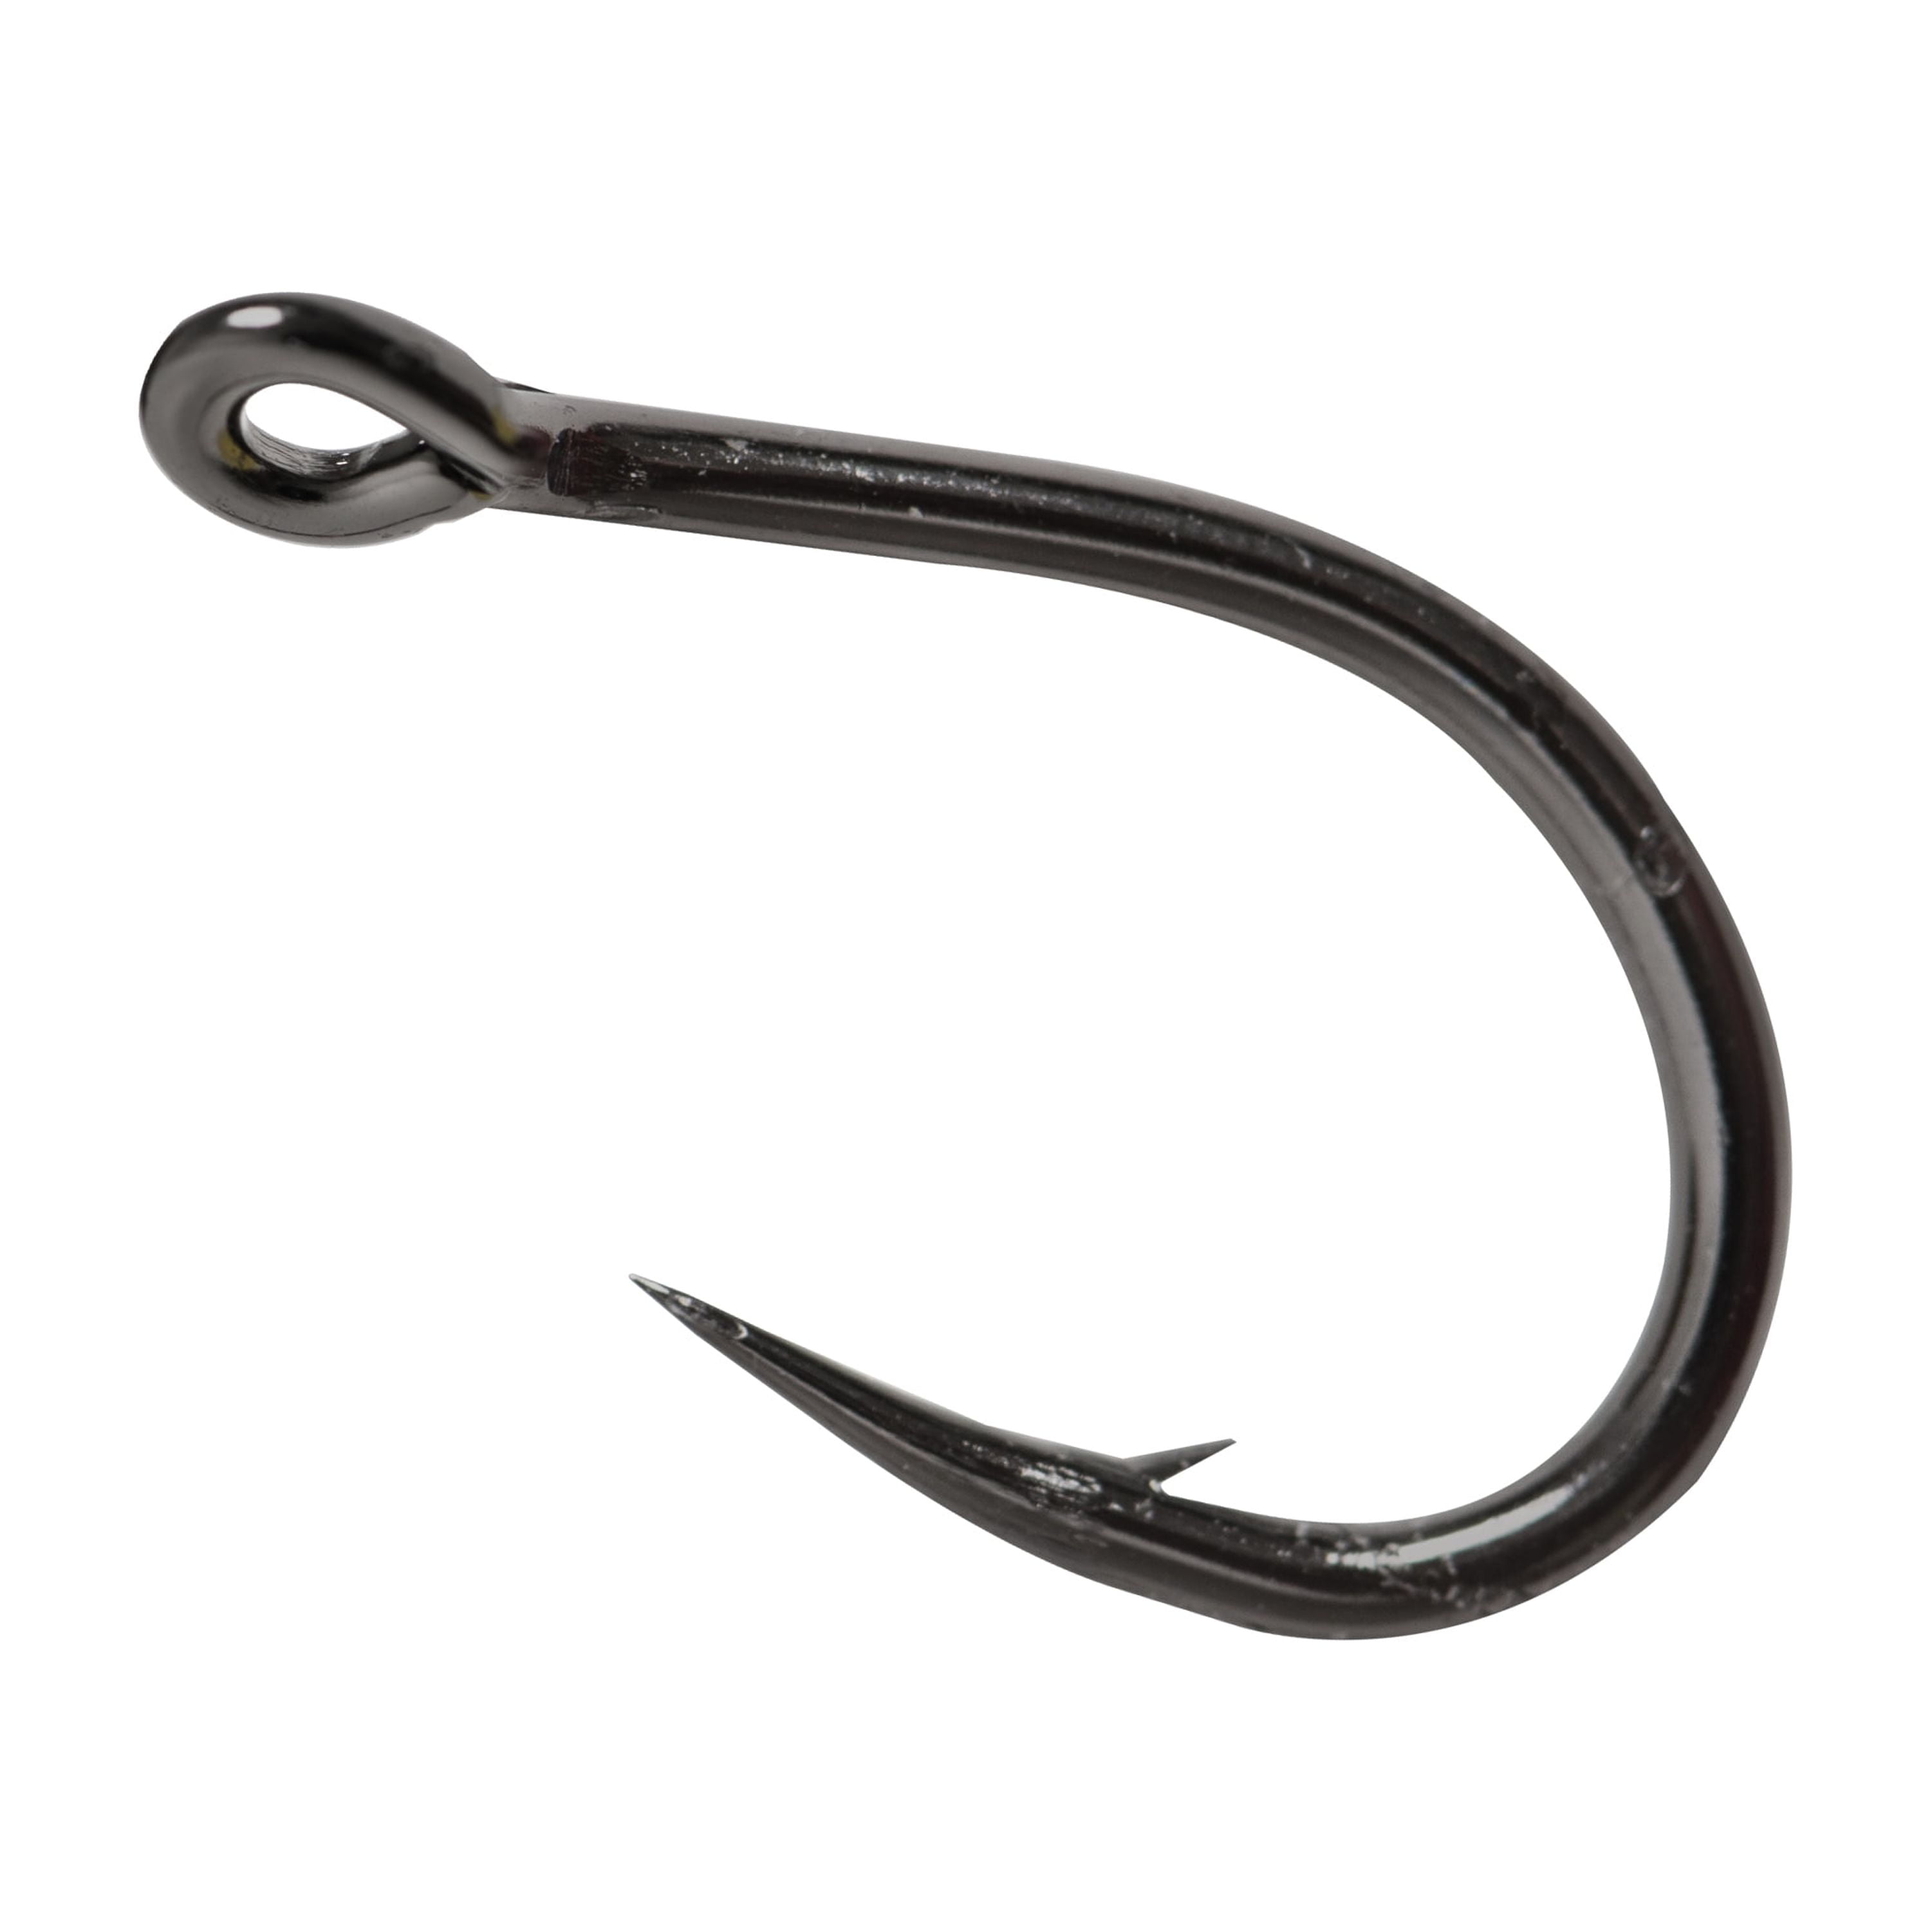 Mustad O'Shaughnessy Live Bait Hook (Black Nickel) - Size: 1/0 8pc